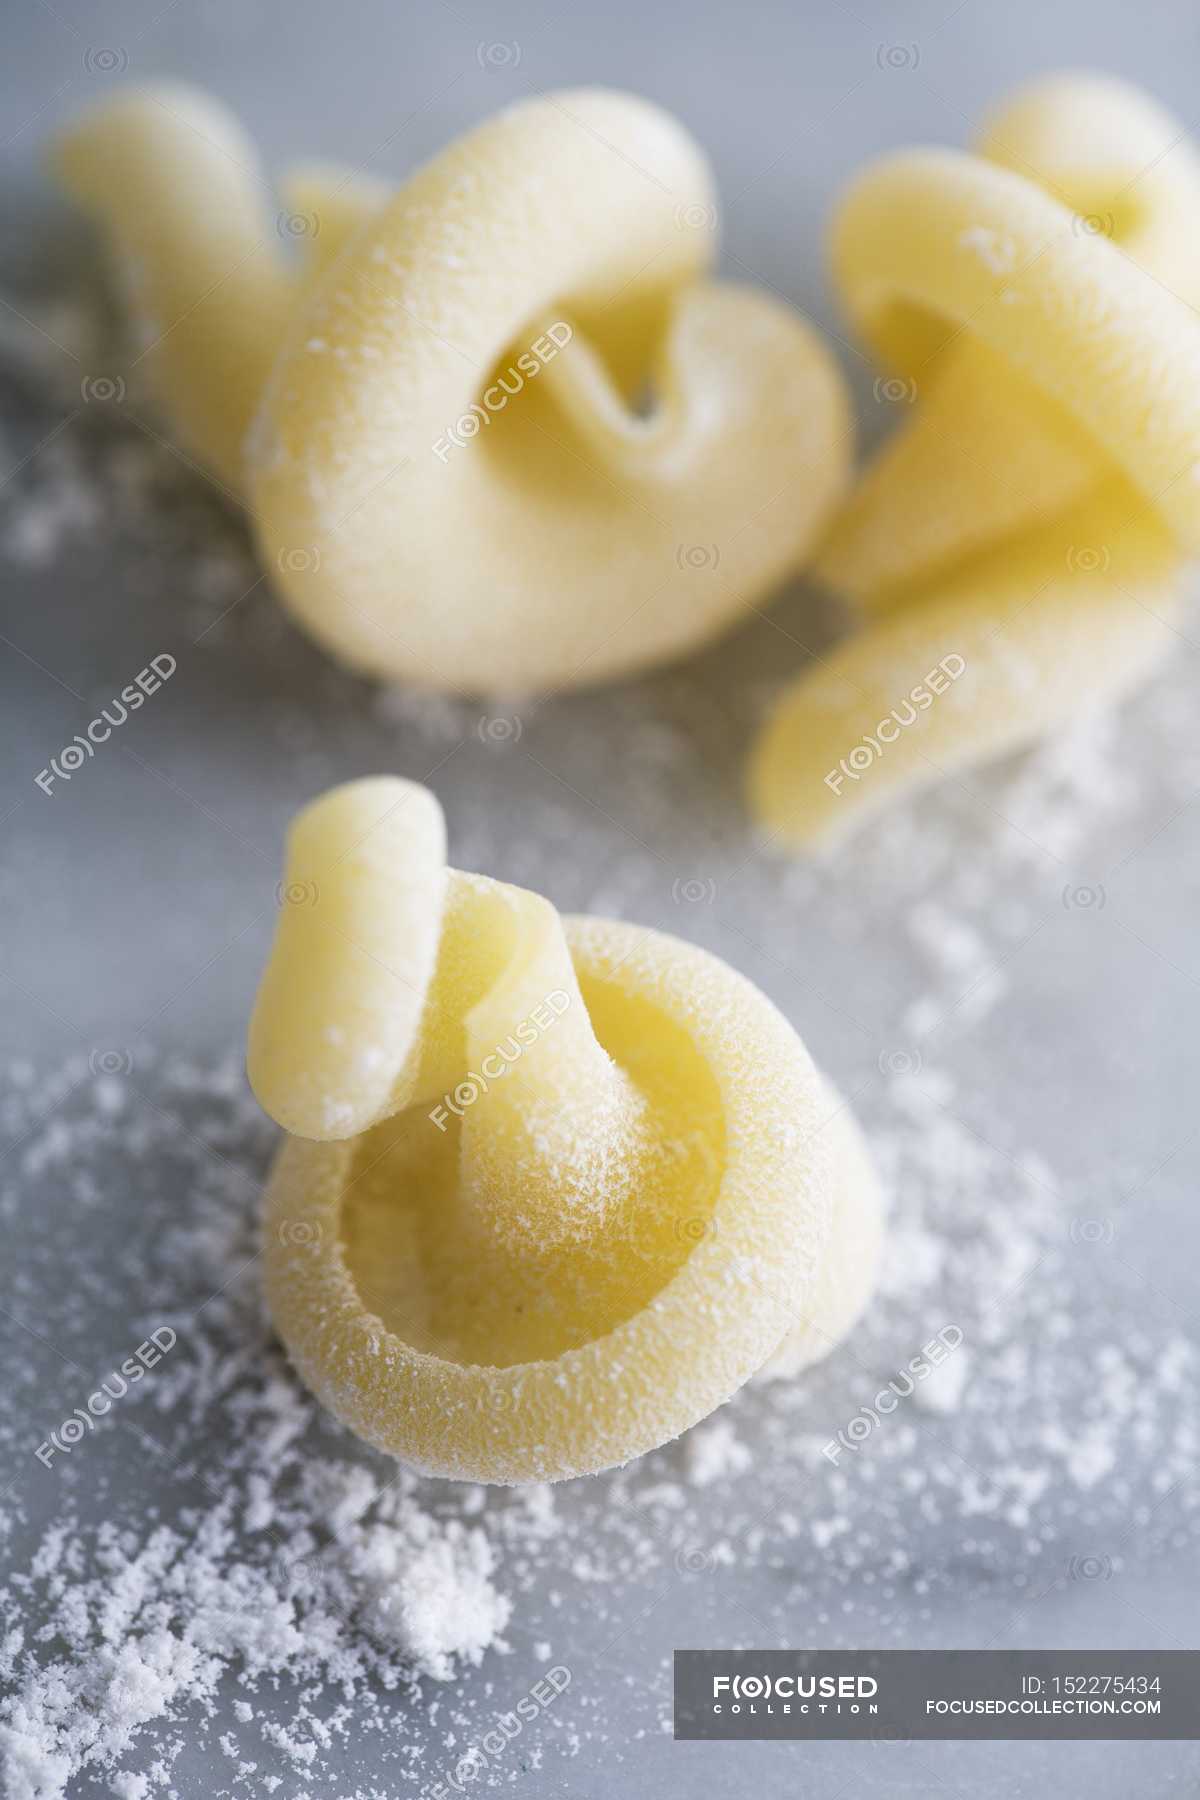 Fresh Vesuvio pasta — marble, wheat - Stock Photo | #152275434